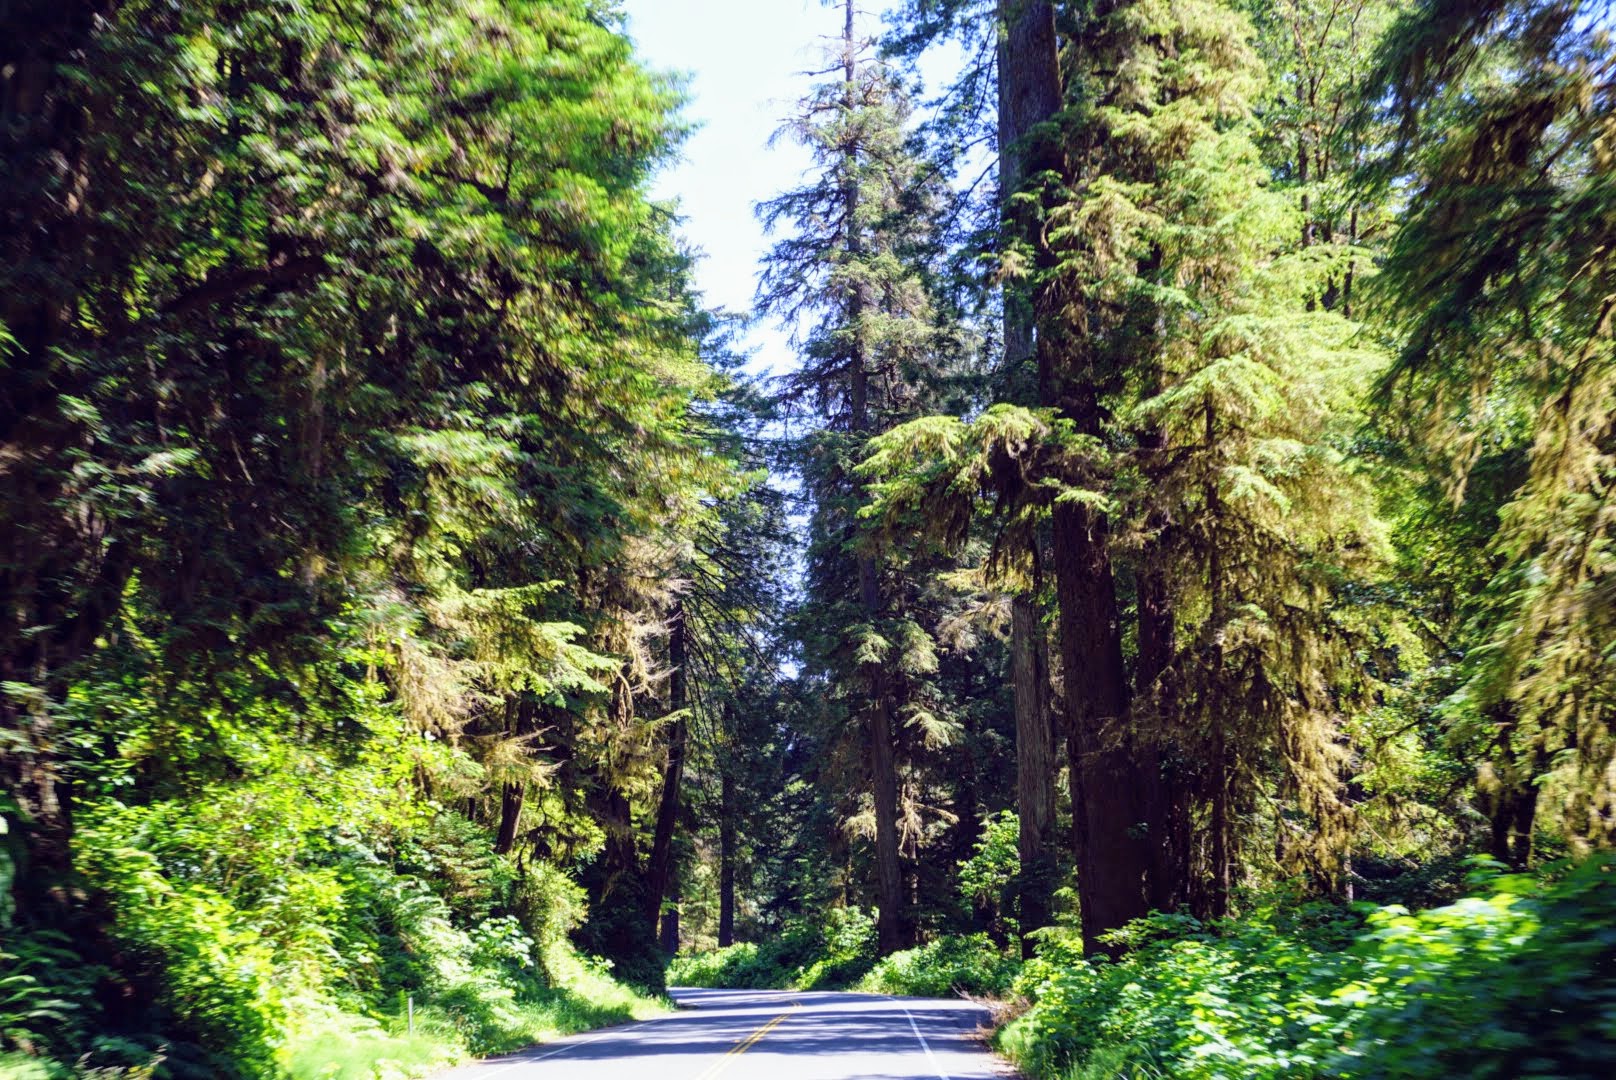 [Trip Report] Redwoods National Park - July 2019